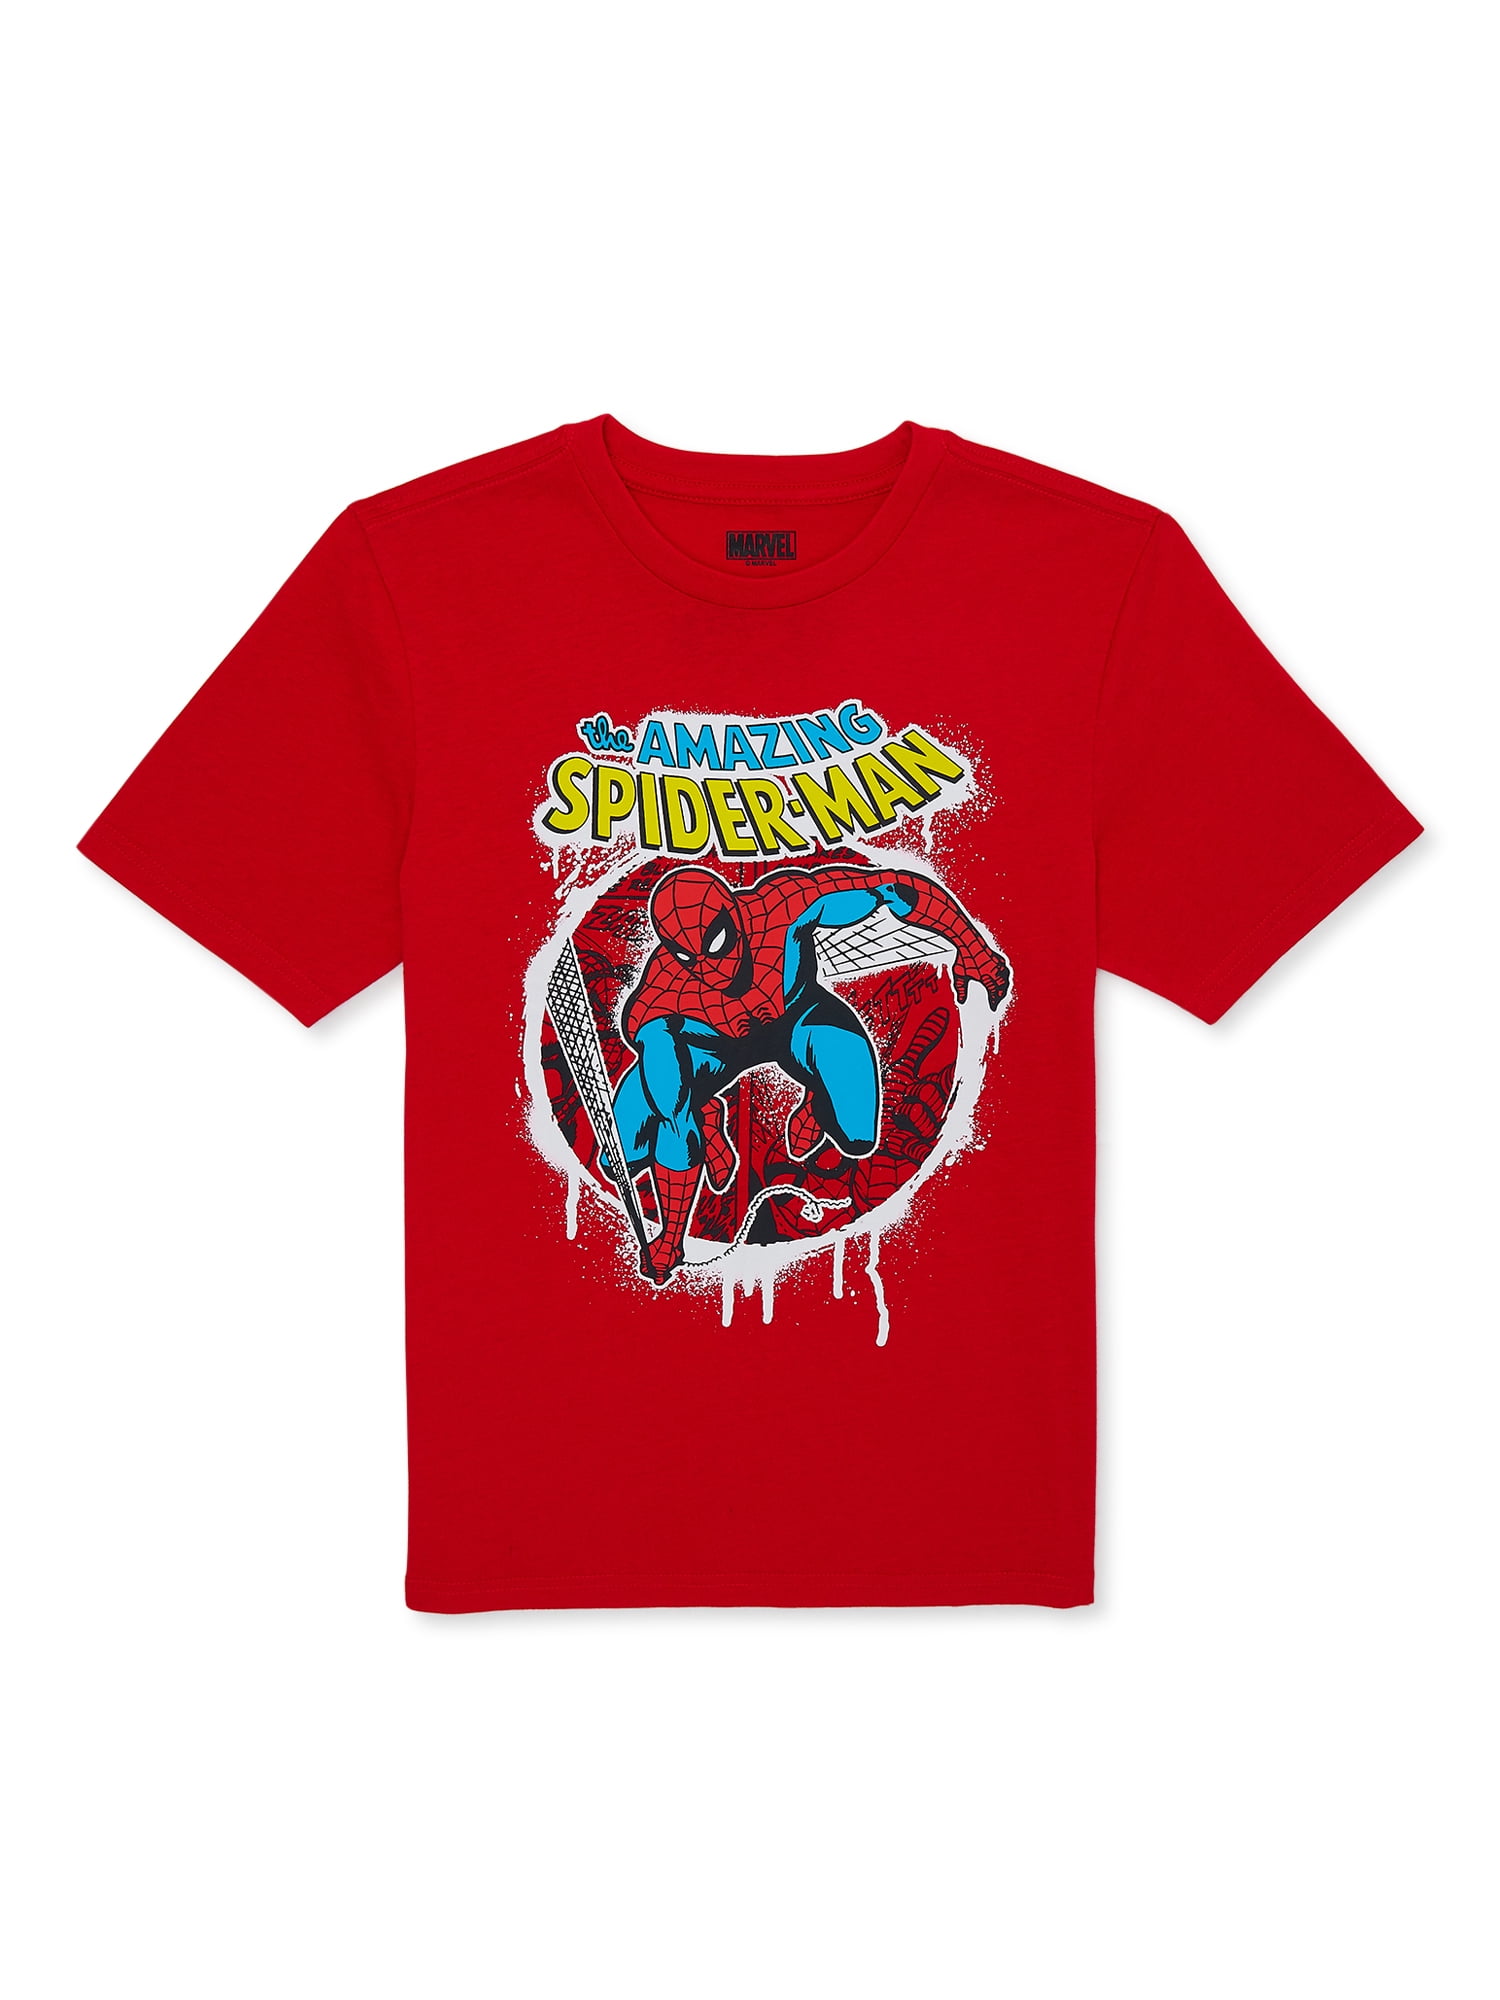 Boys 4-12 Jumping Beans® Marvel Spider-Man Tie-Dye Tank Top